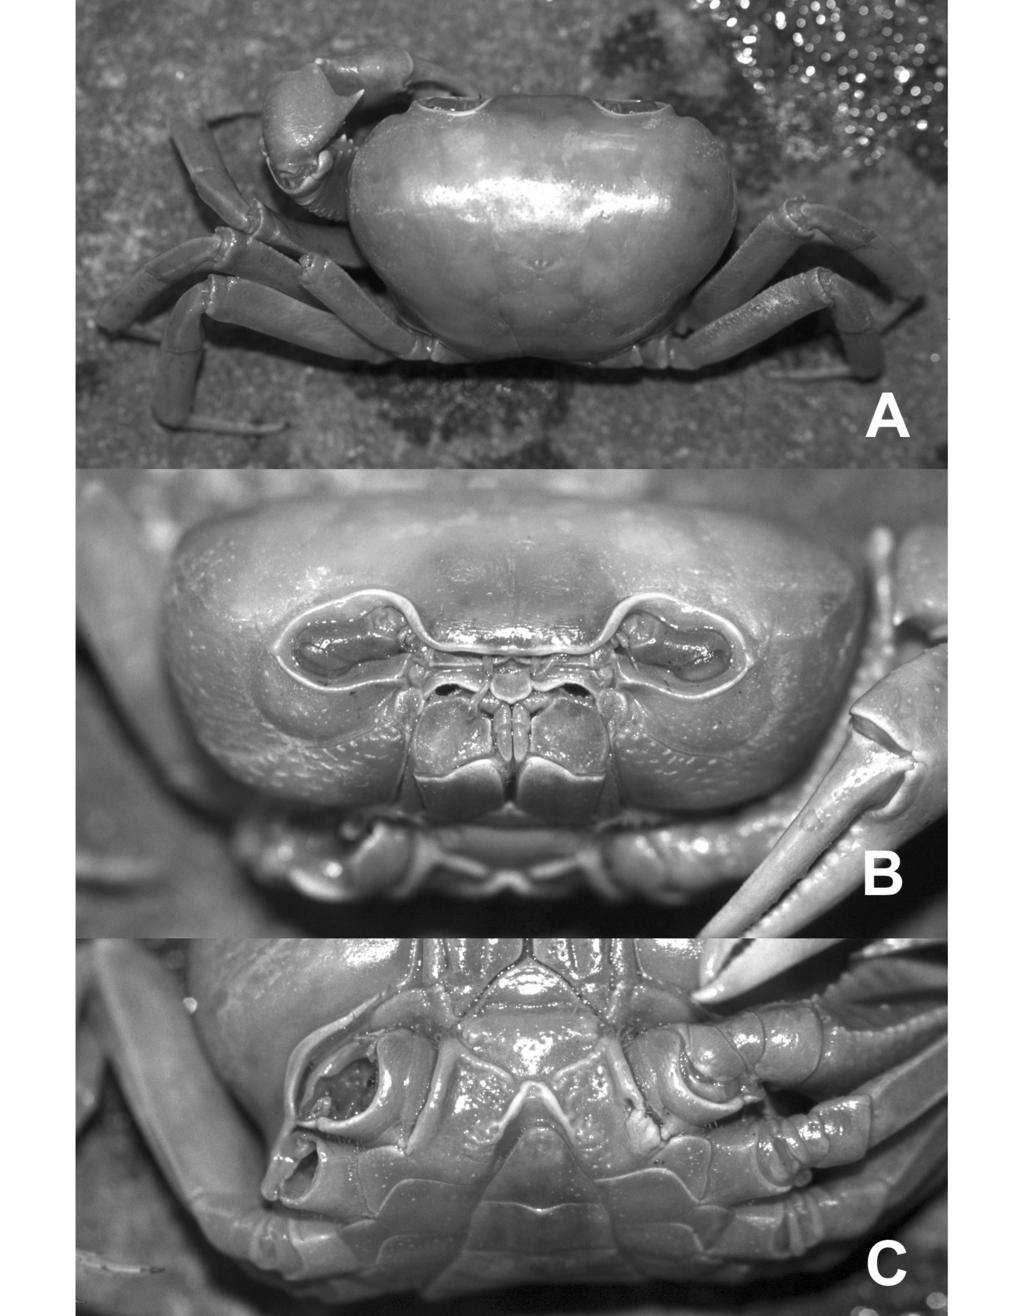 FIGURE 4. Laevimon tankiense (Dang & Tran, 1992). Holotype, male (40.0 by 26.